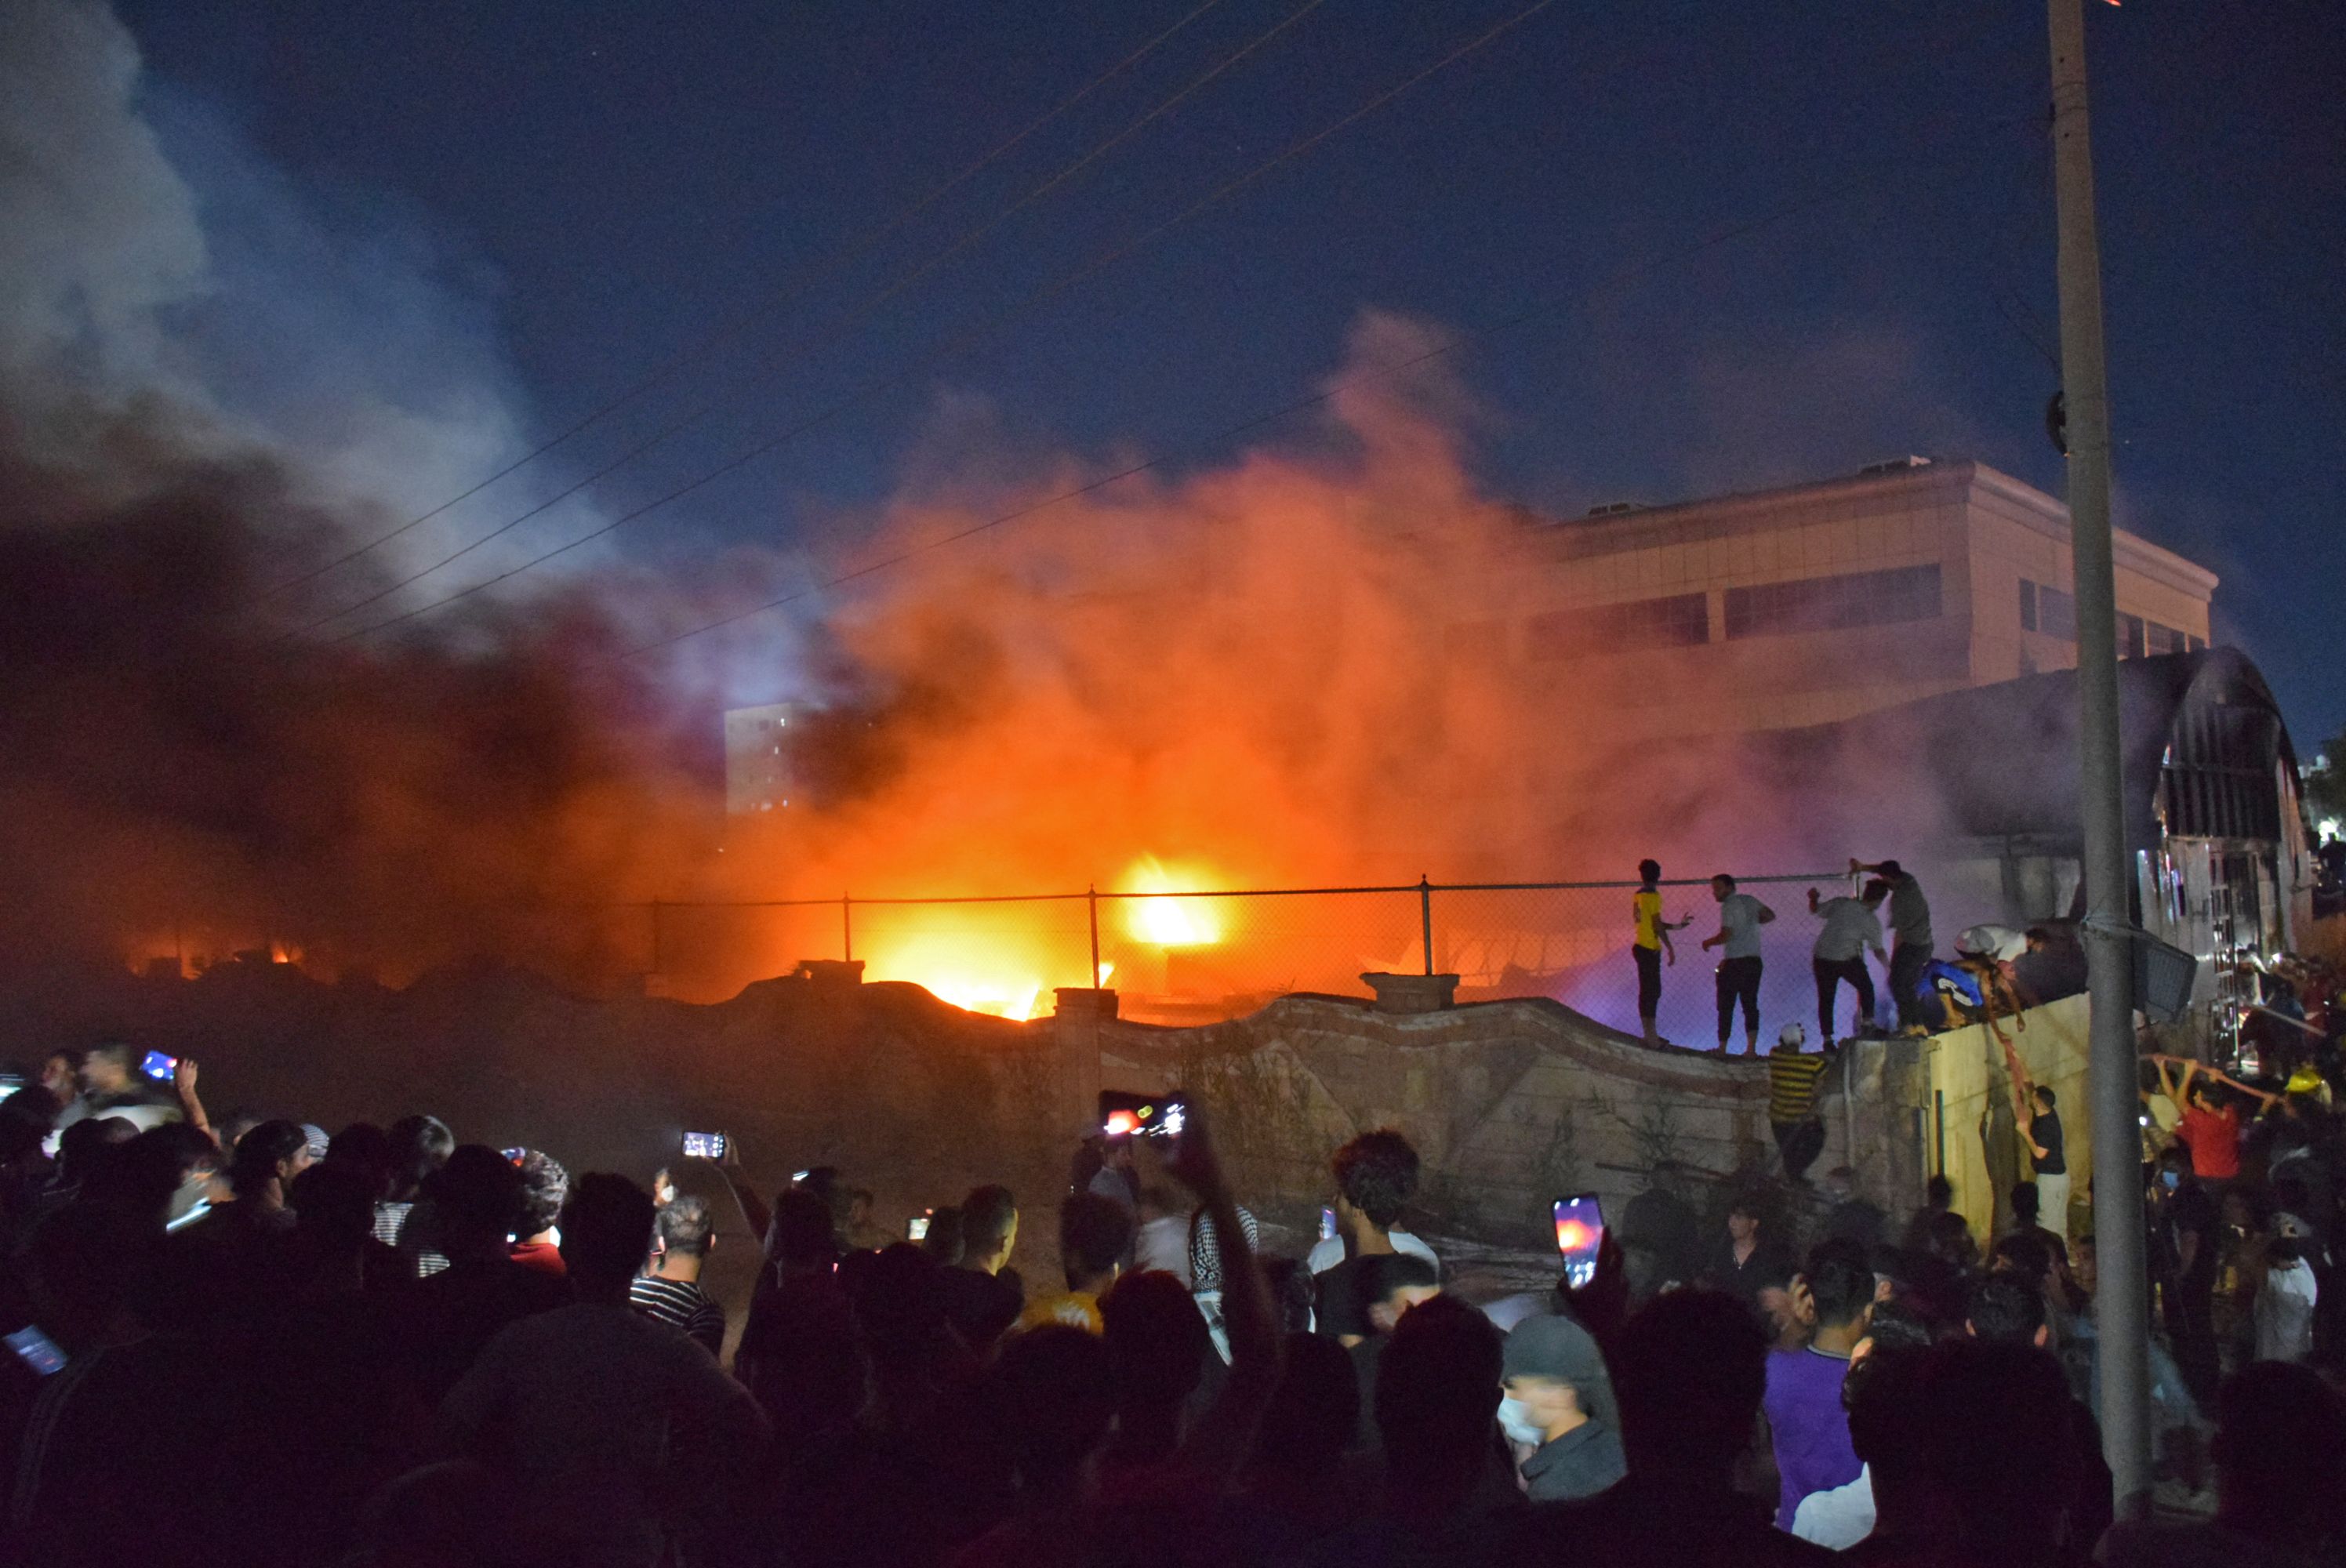 Crowds gather around the burning coronavirus isolation ward of Al-Hussein hospital